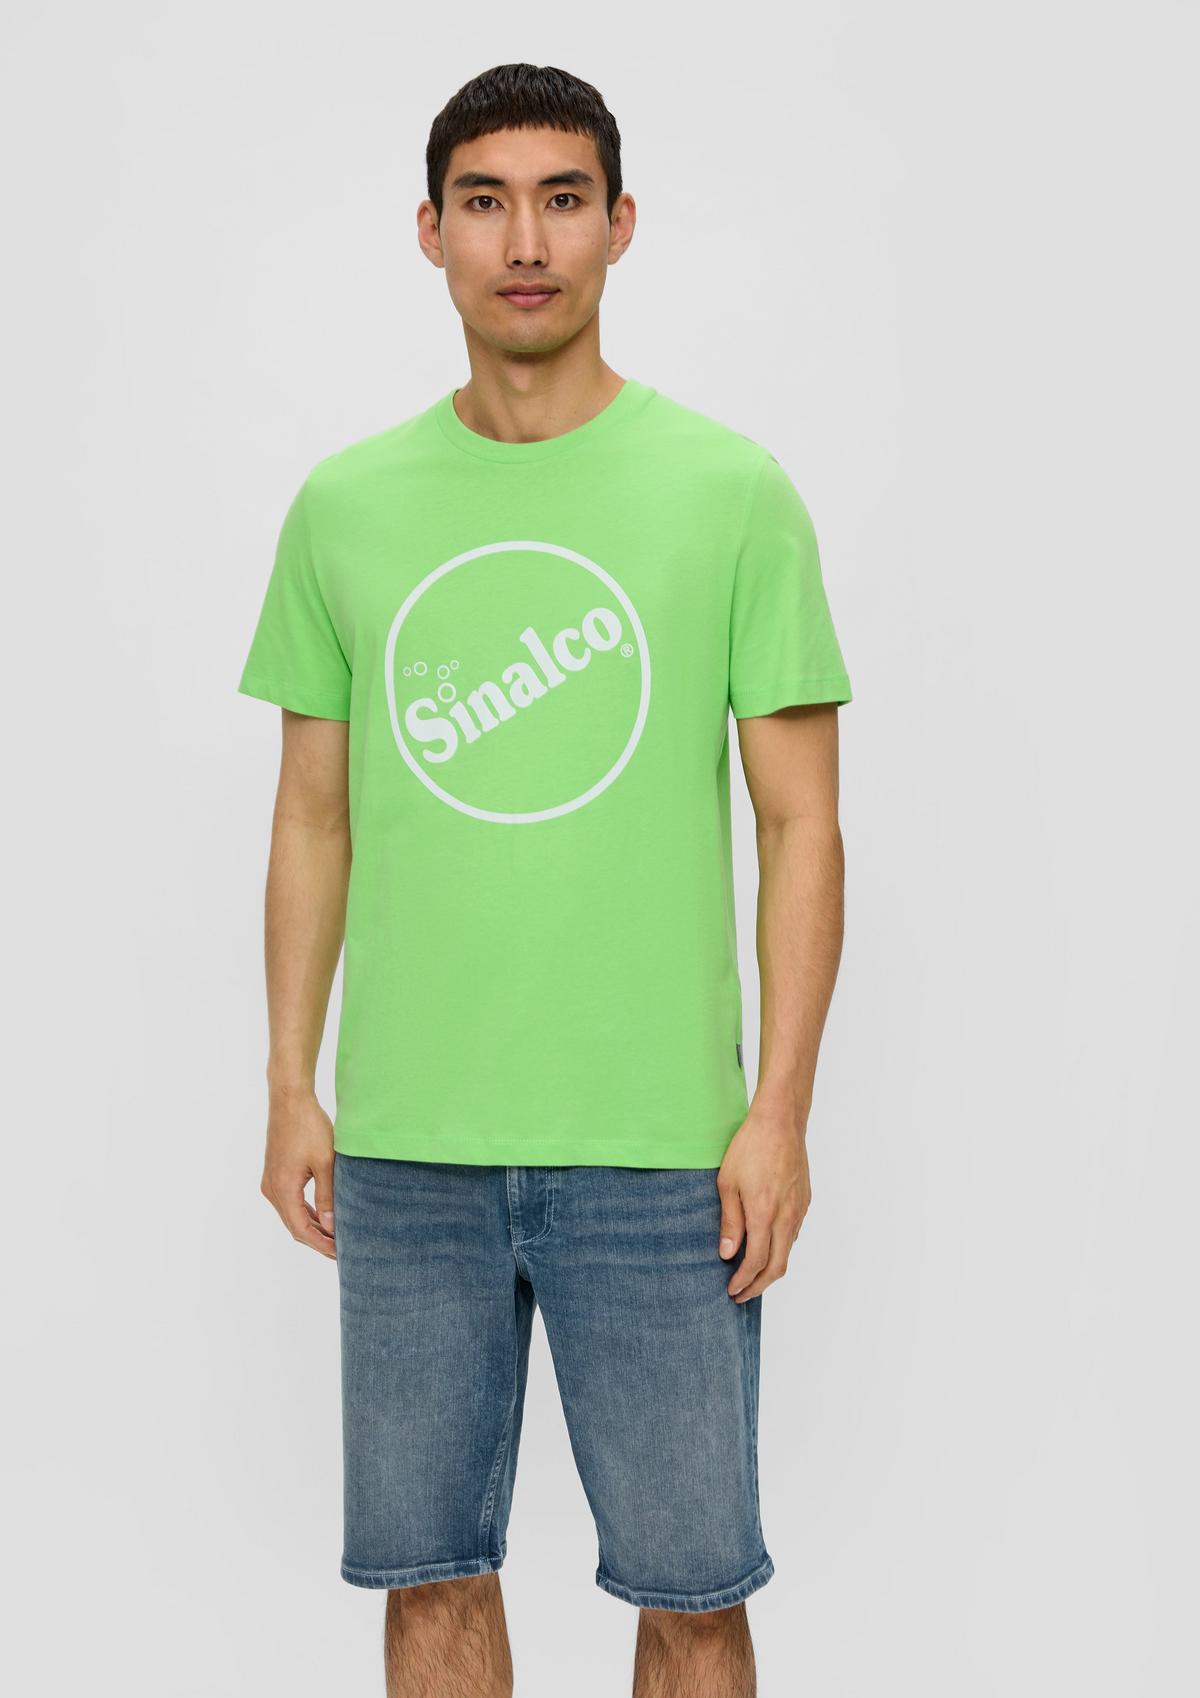 s.Oliver T-shirt met Sinalco®-print